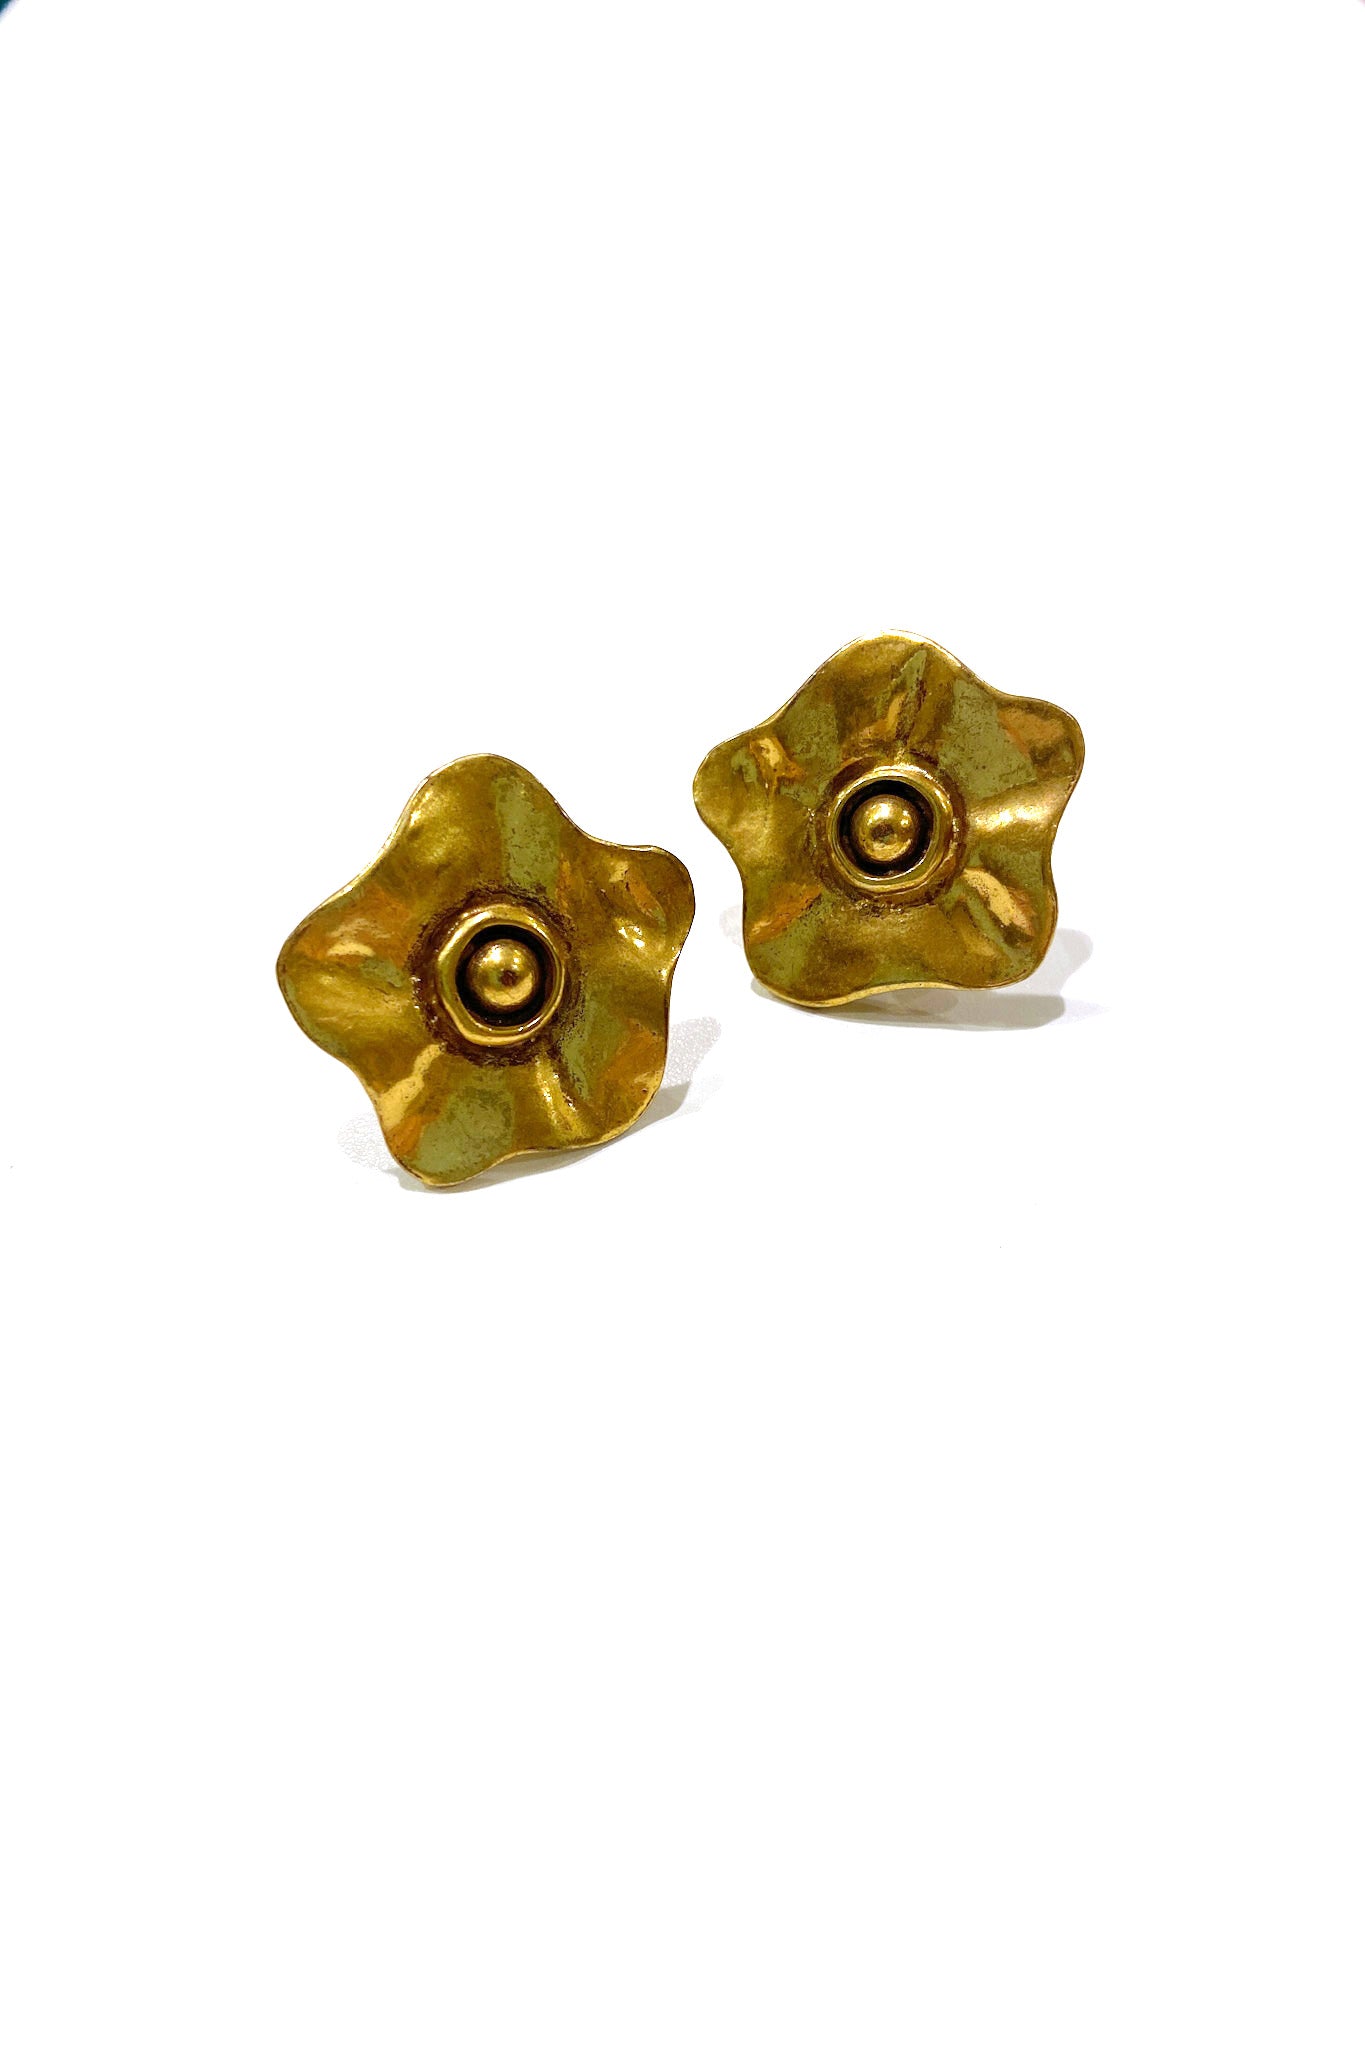 Vintage gold flower earring 花の輝き